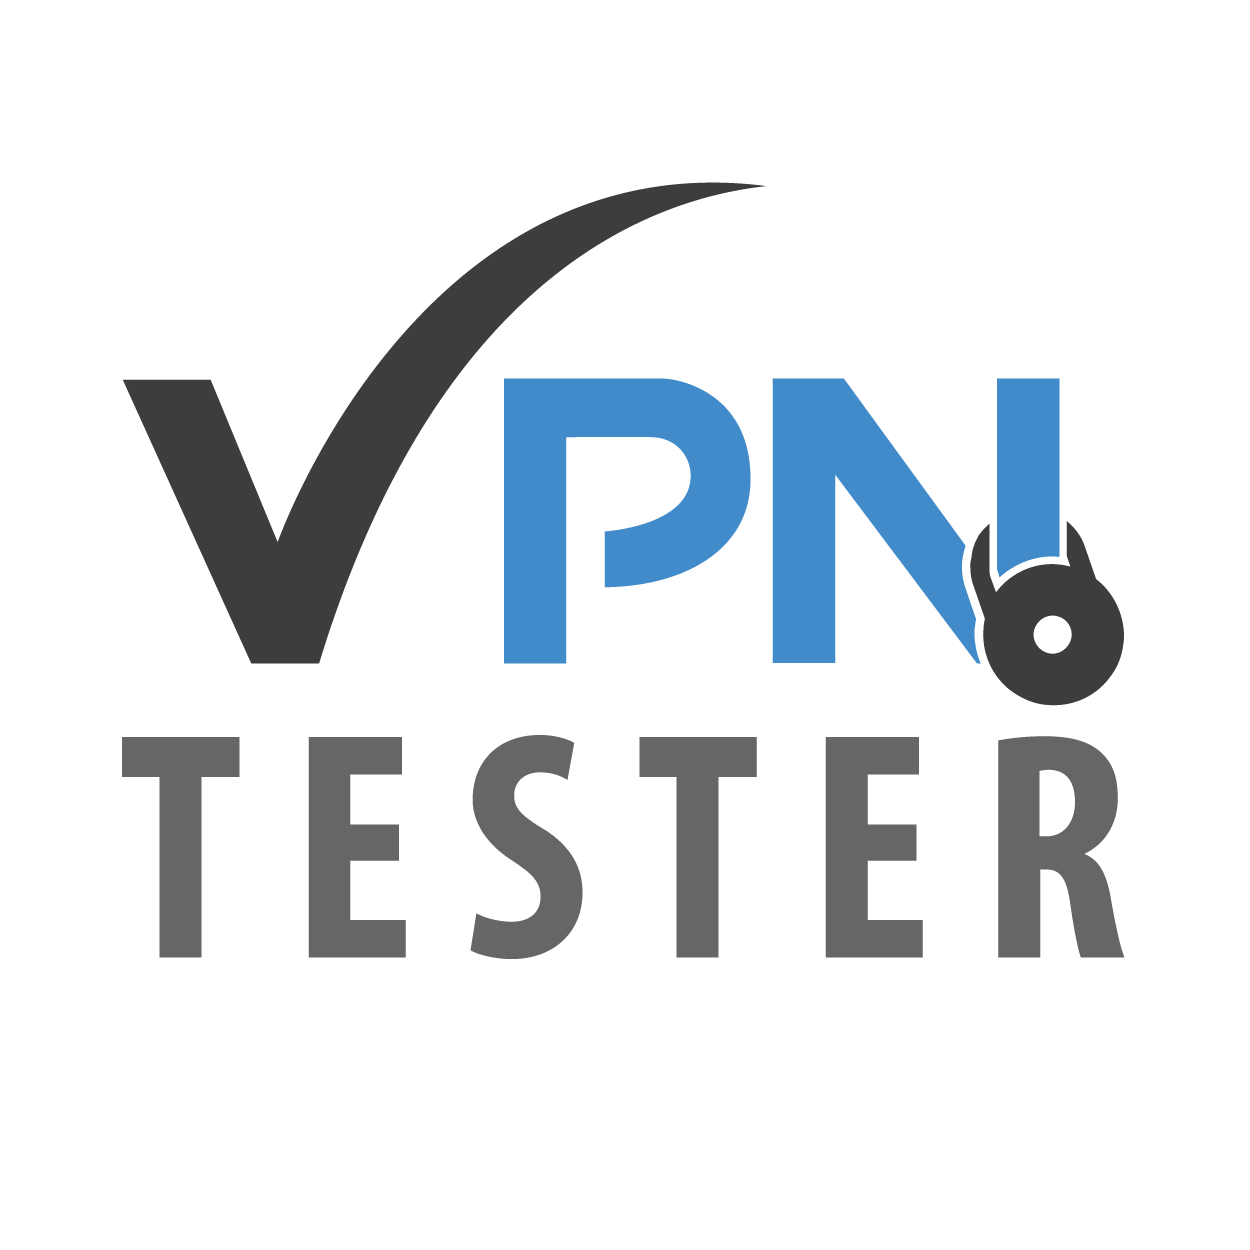 iTop VPN - Test & Erfahrungen: Warnung aus Datenschutzgründen 1